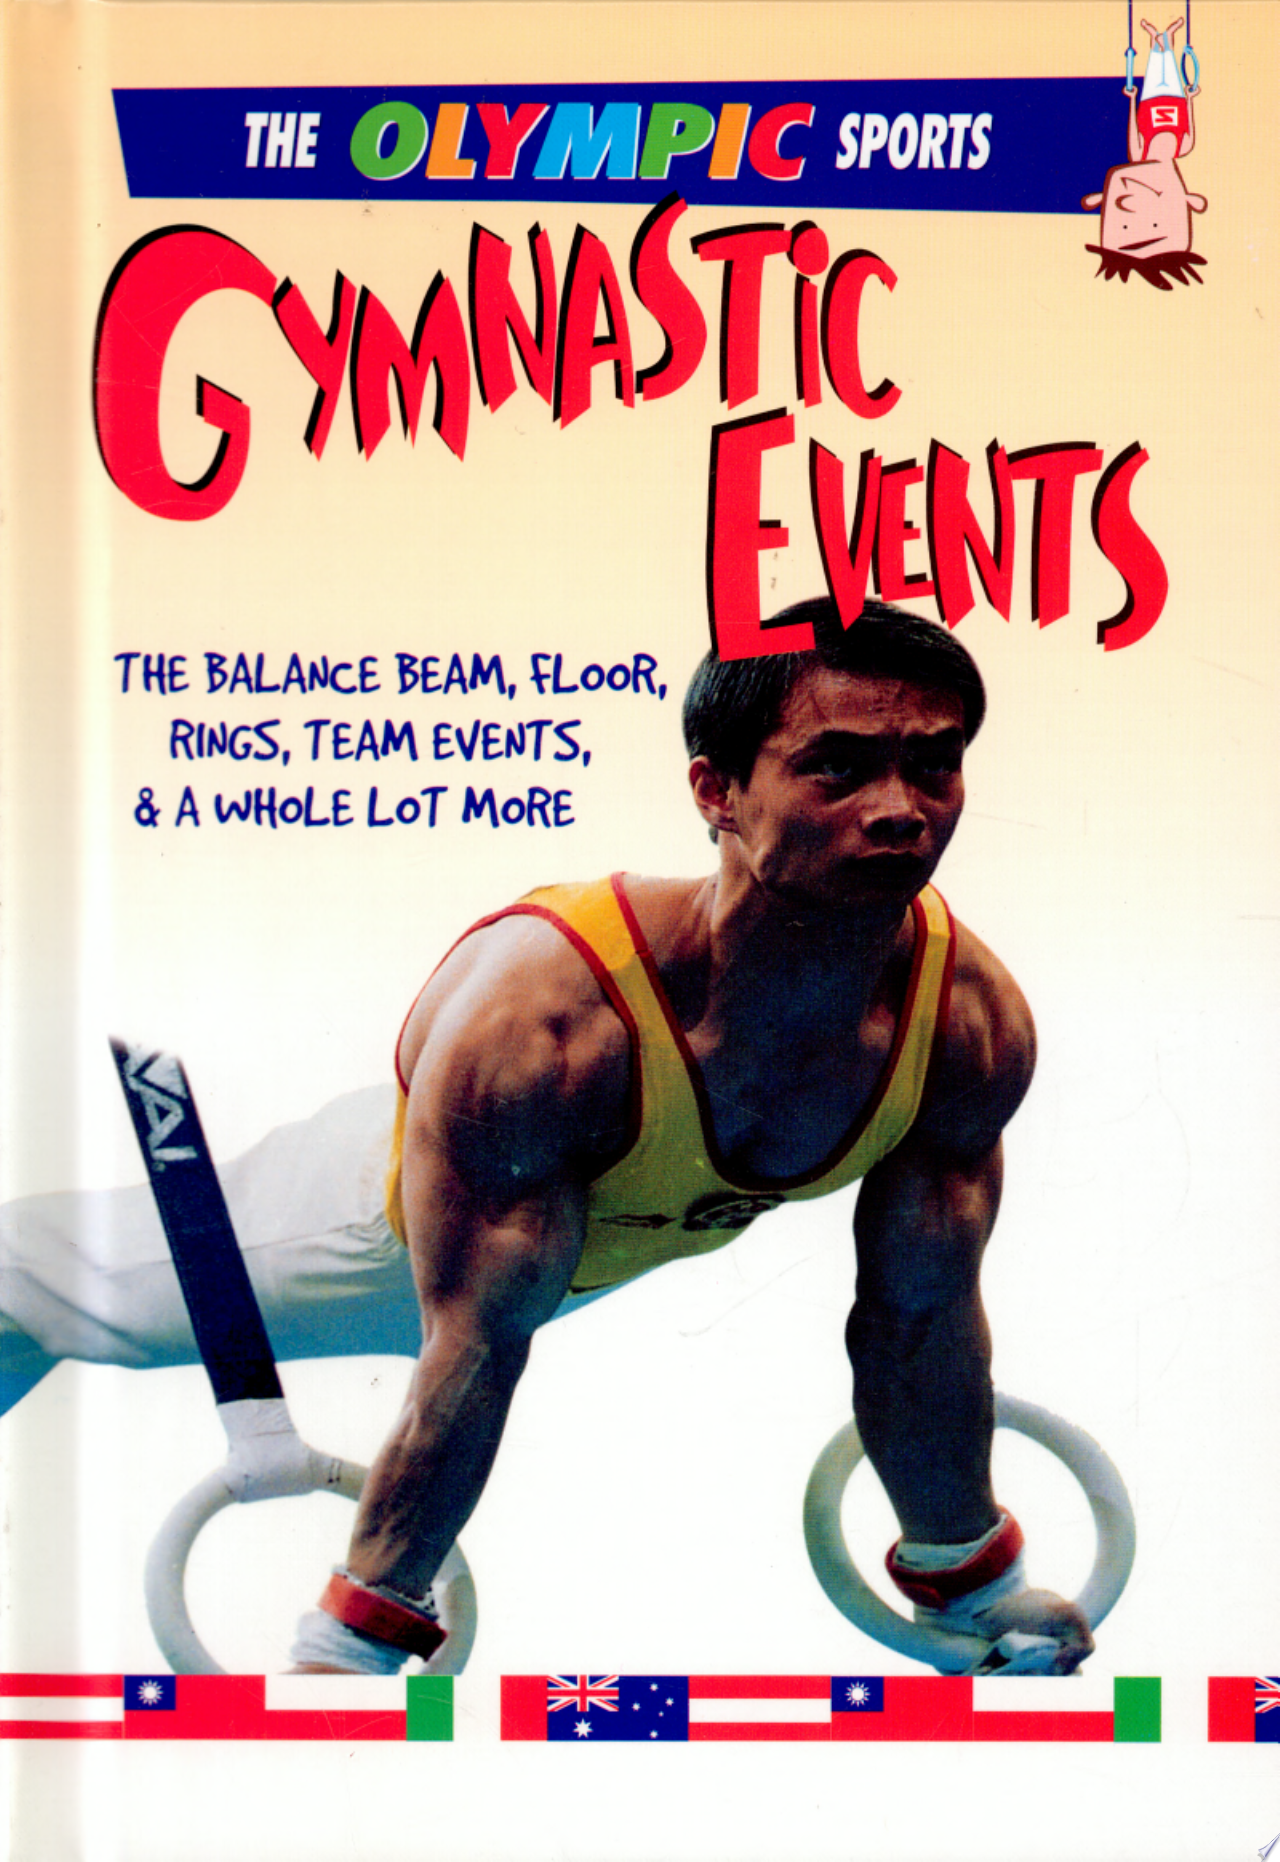 Image for "Gymnastics Events"